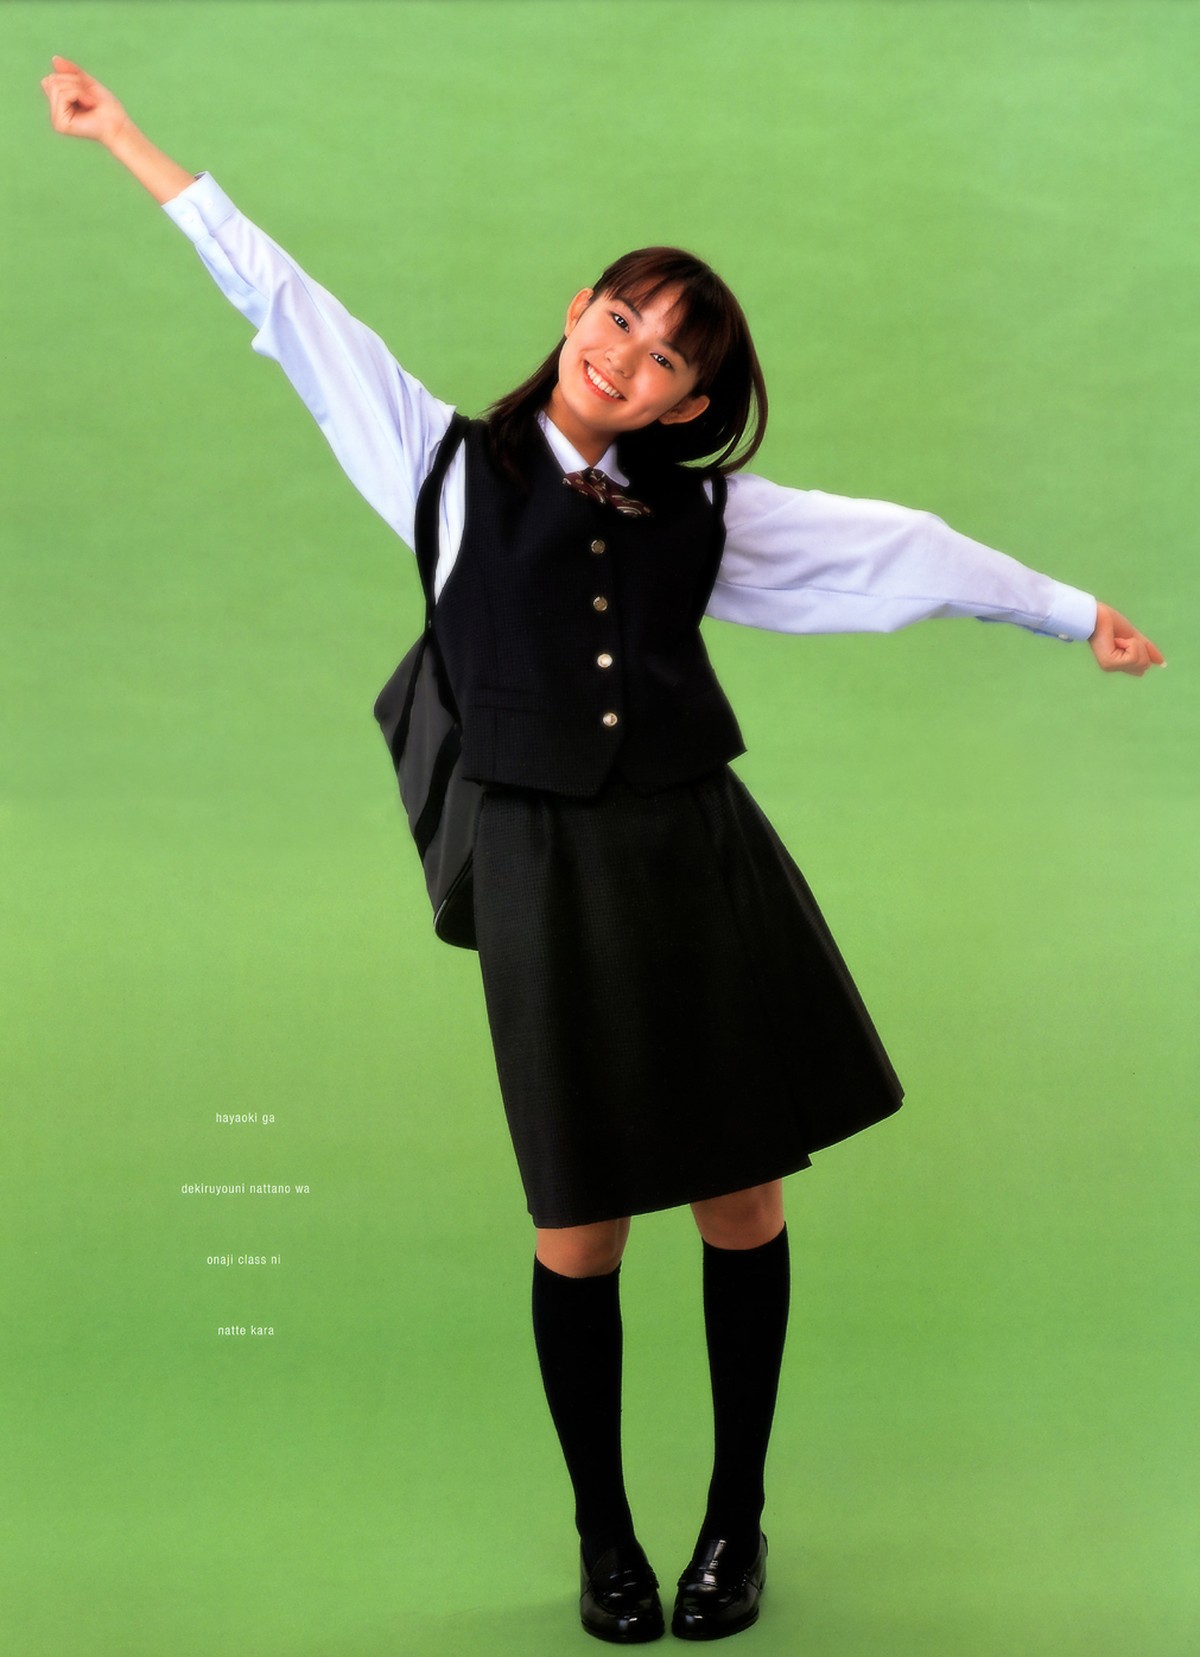 Photobook Yui Ichikawa 市川由衣 Uniform Collection 0014 3183542485.jpg